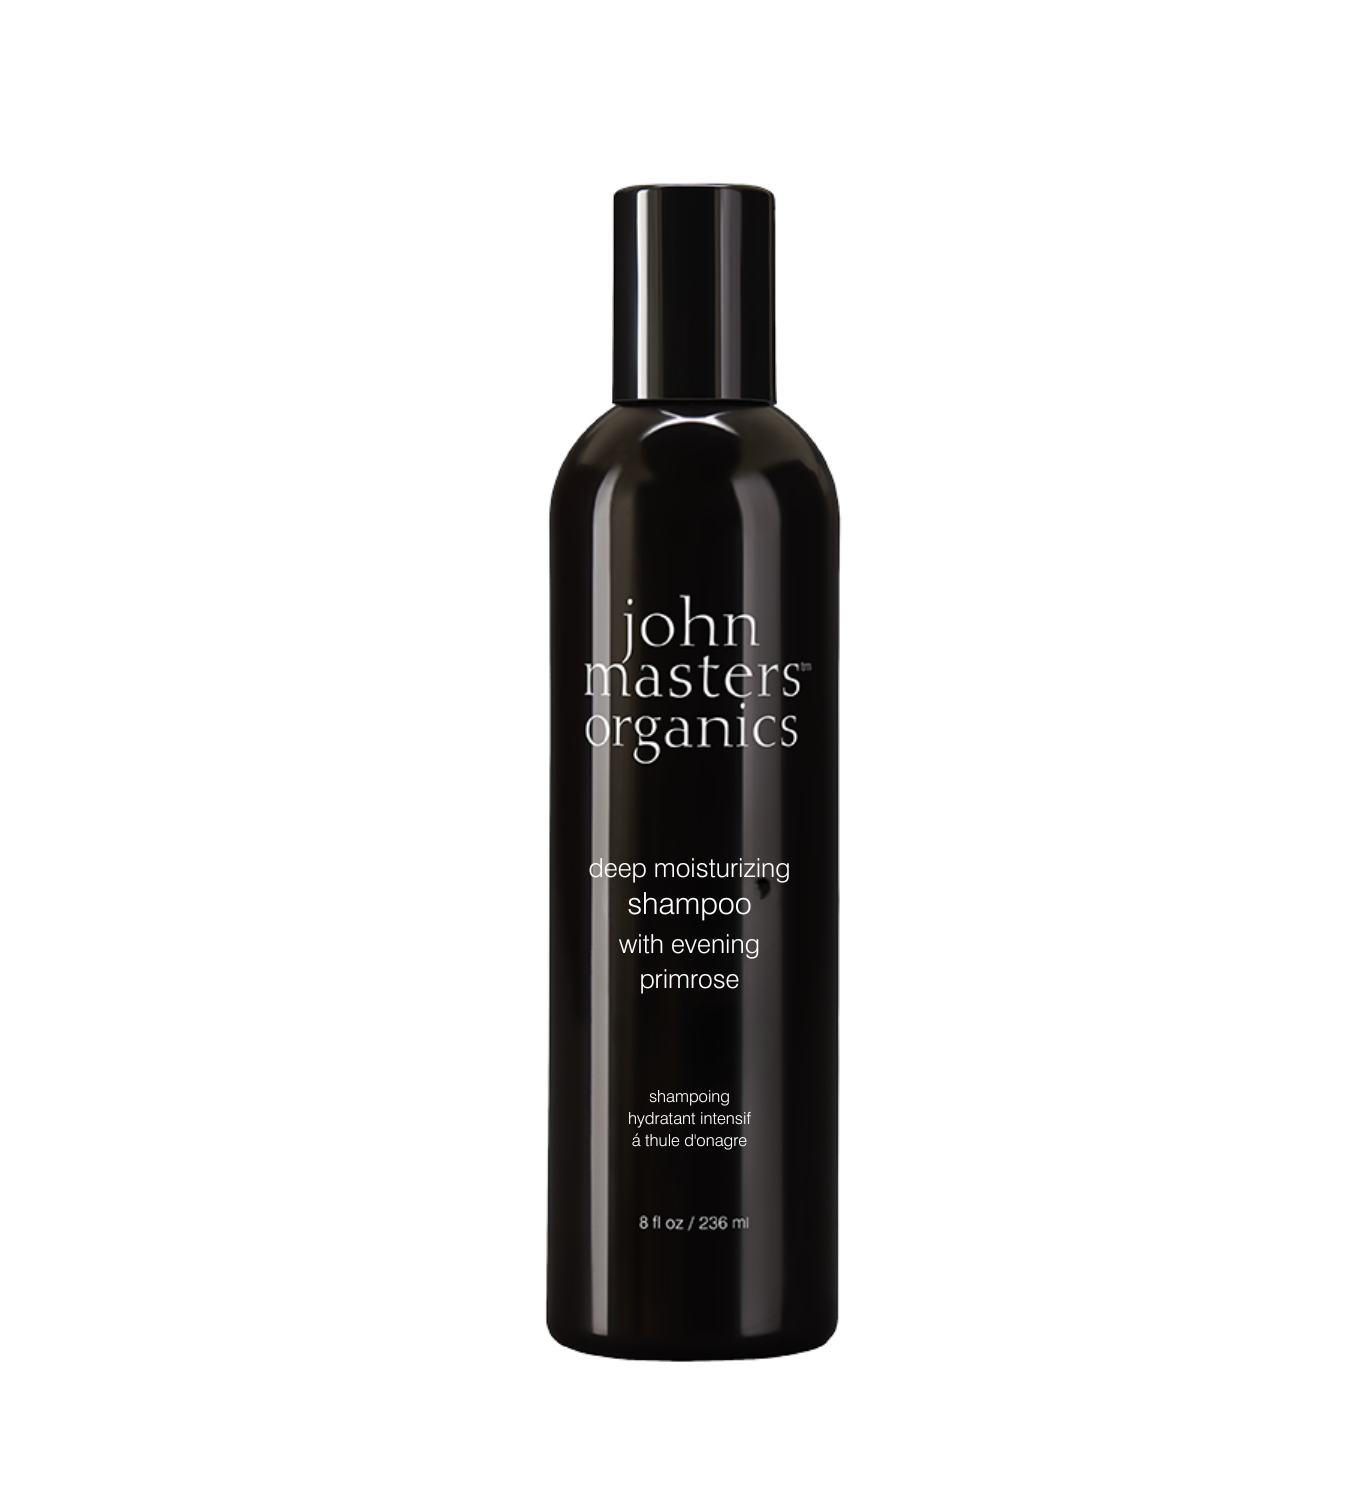 Shampoo for Dry Hair with Evening Primrose: 8 fl oz / 236 ml